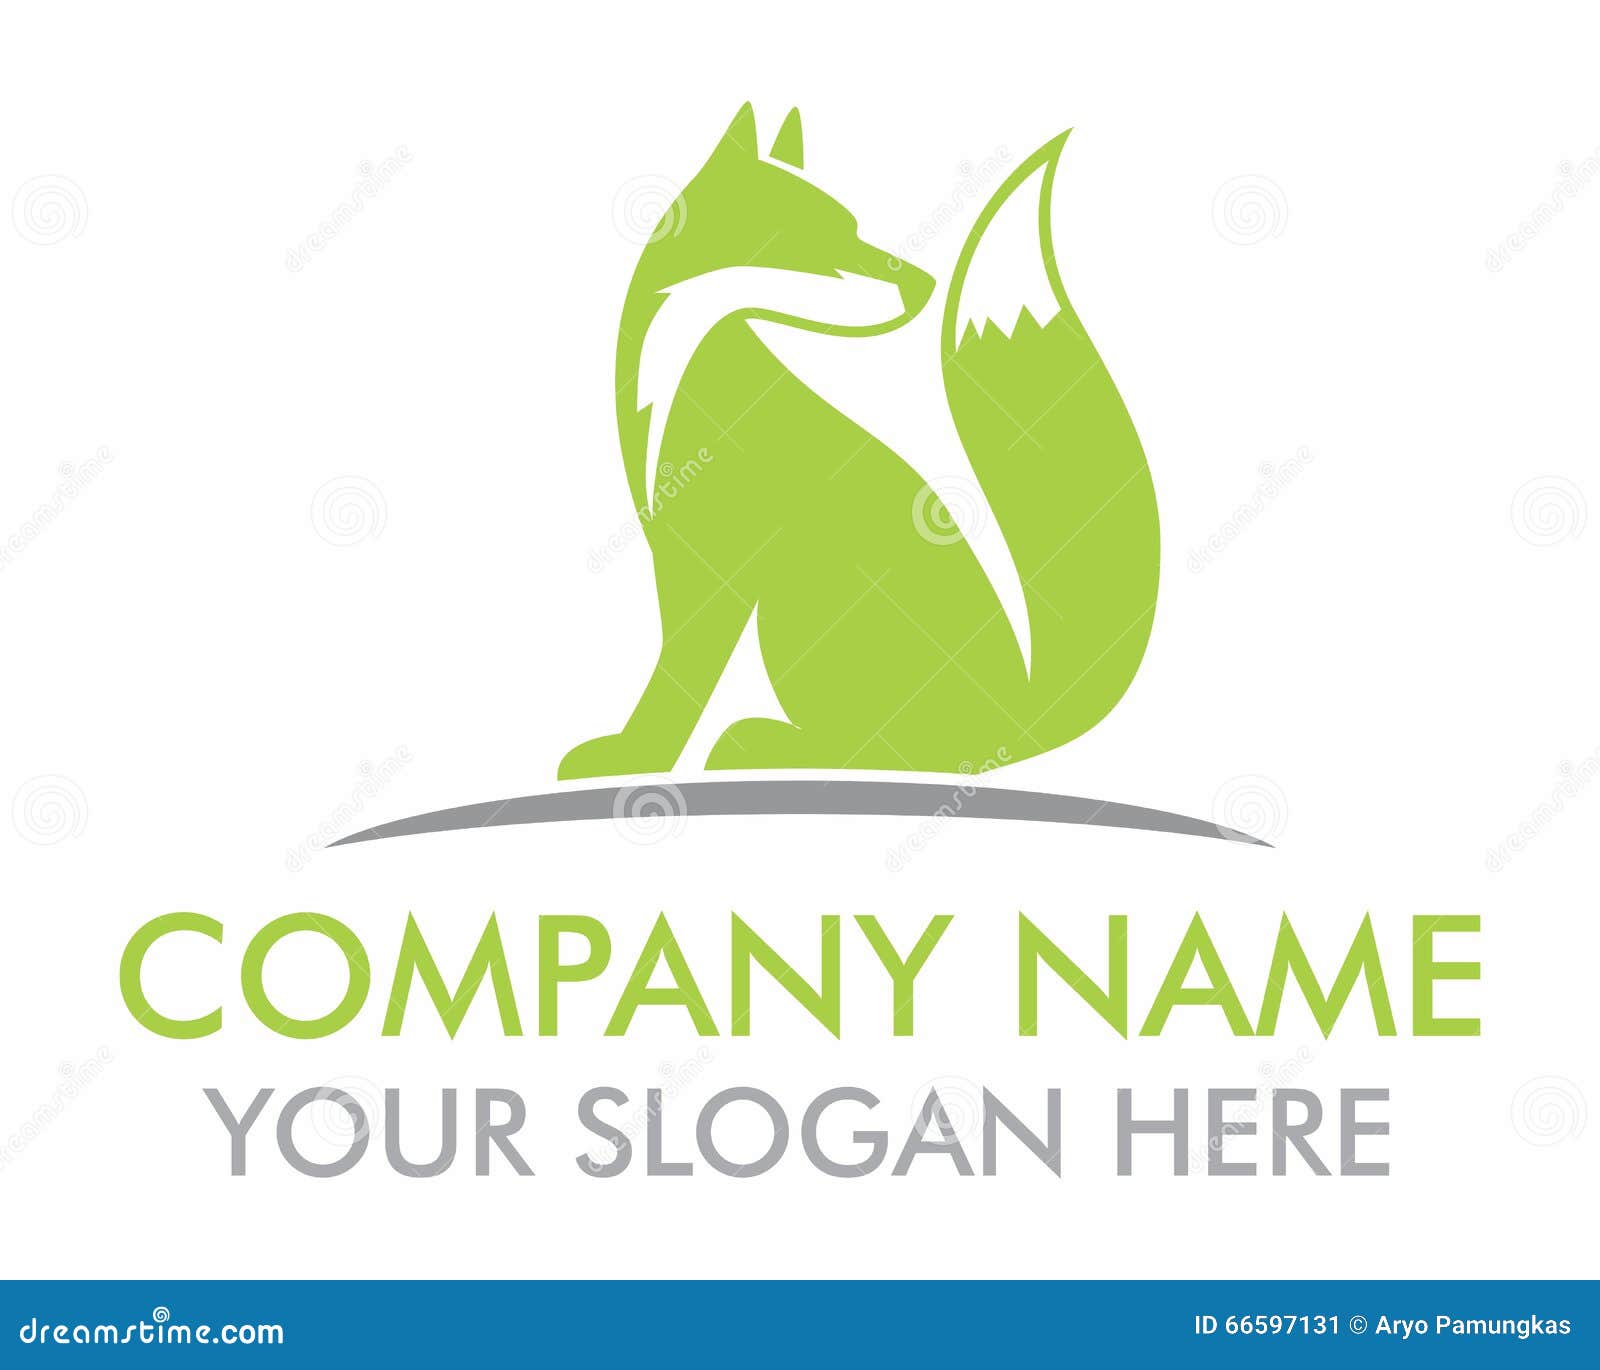 green-fox-silhouette-logo-good-mascot-yo